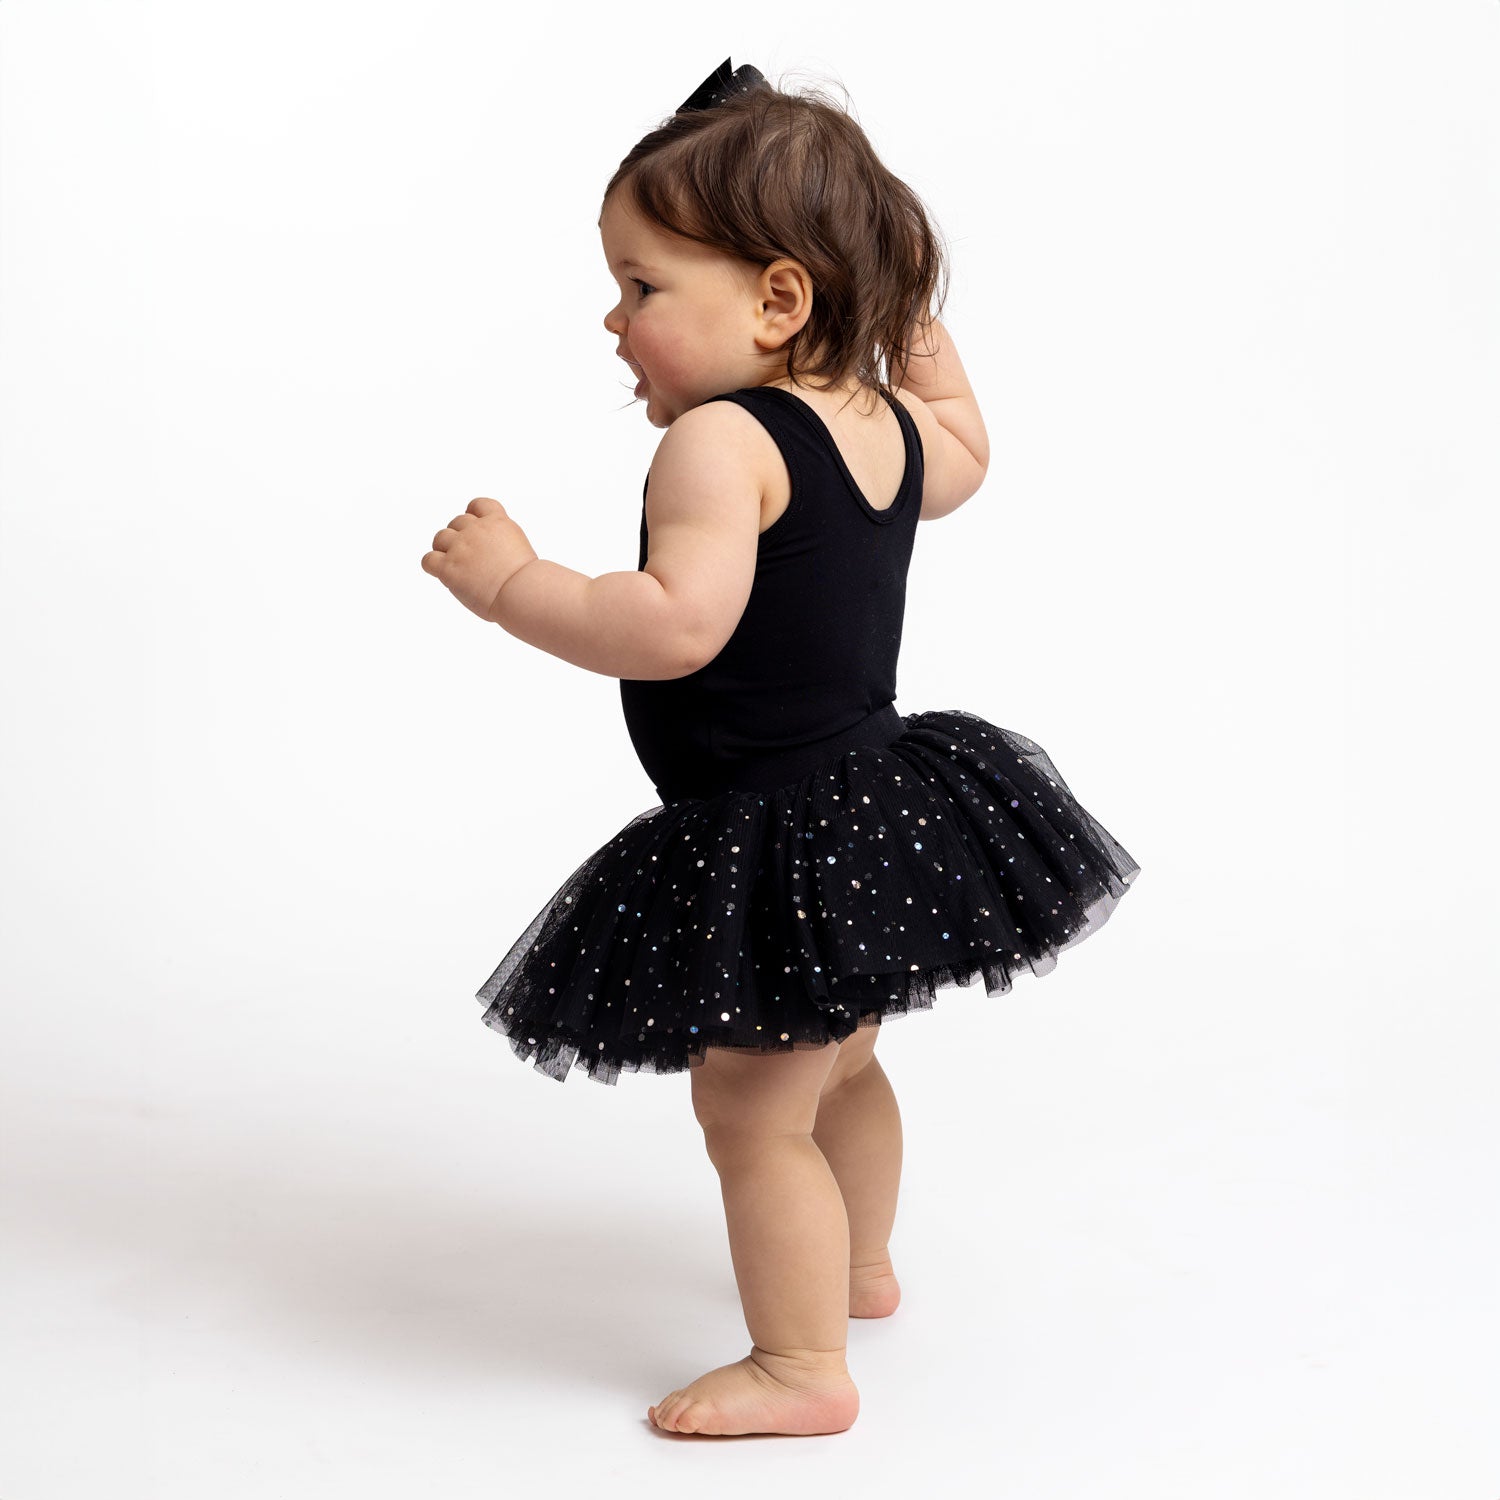 Flo Dancewear Baby Ballet Tutu in Black with Sequins